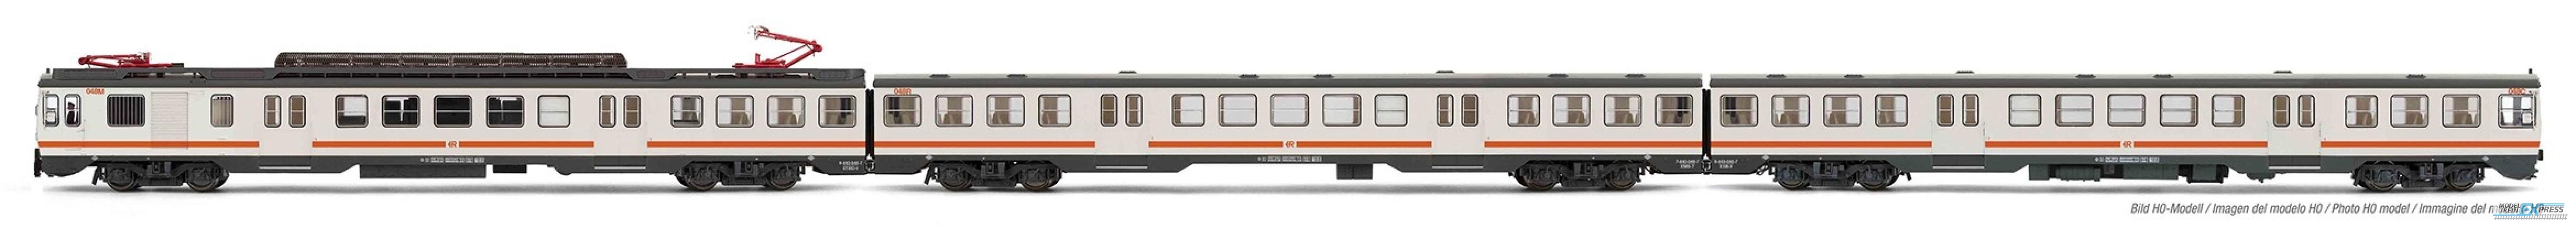 Arnold 2442 RENFE, 3-unit EMU, class 440, white/orange "Regionales" livery, period V